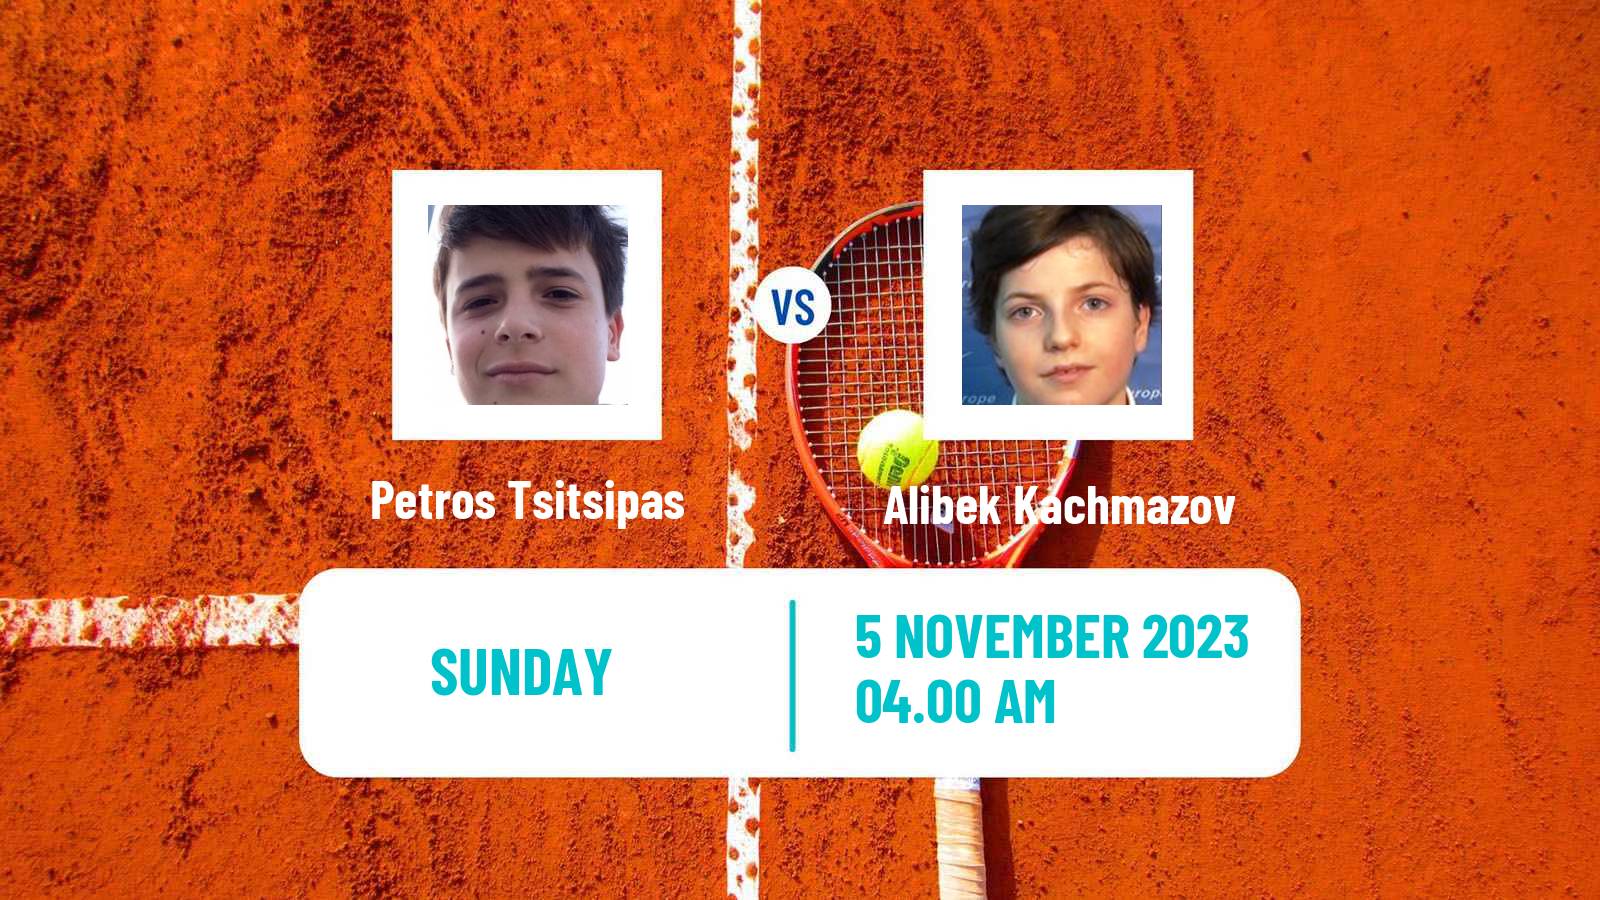 Tennis Helsinki Challenger Men Petros Tsitsipas - Alibek Kachmazov